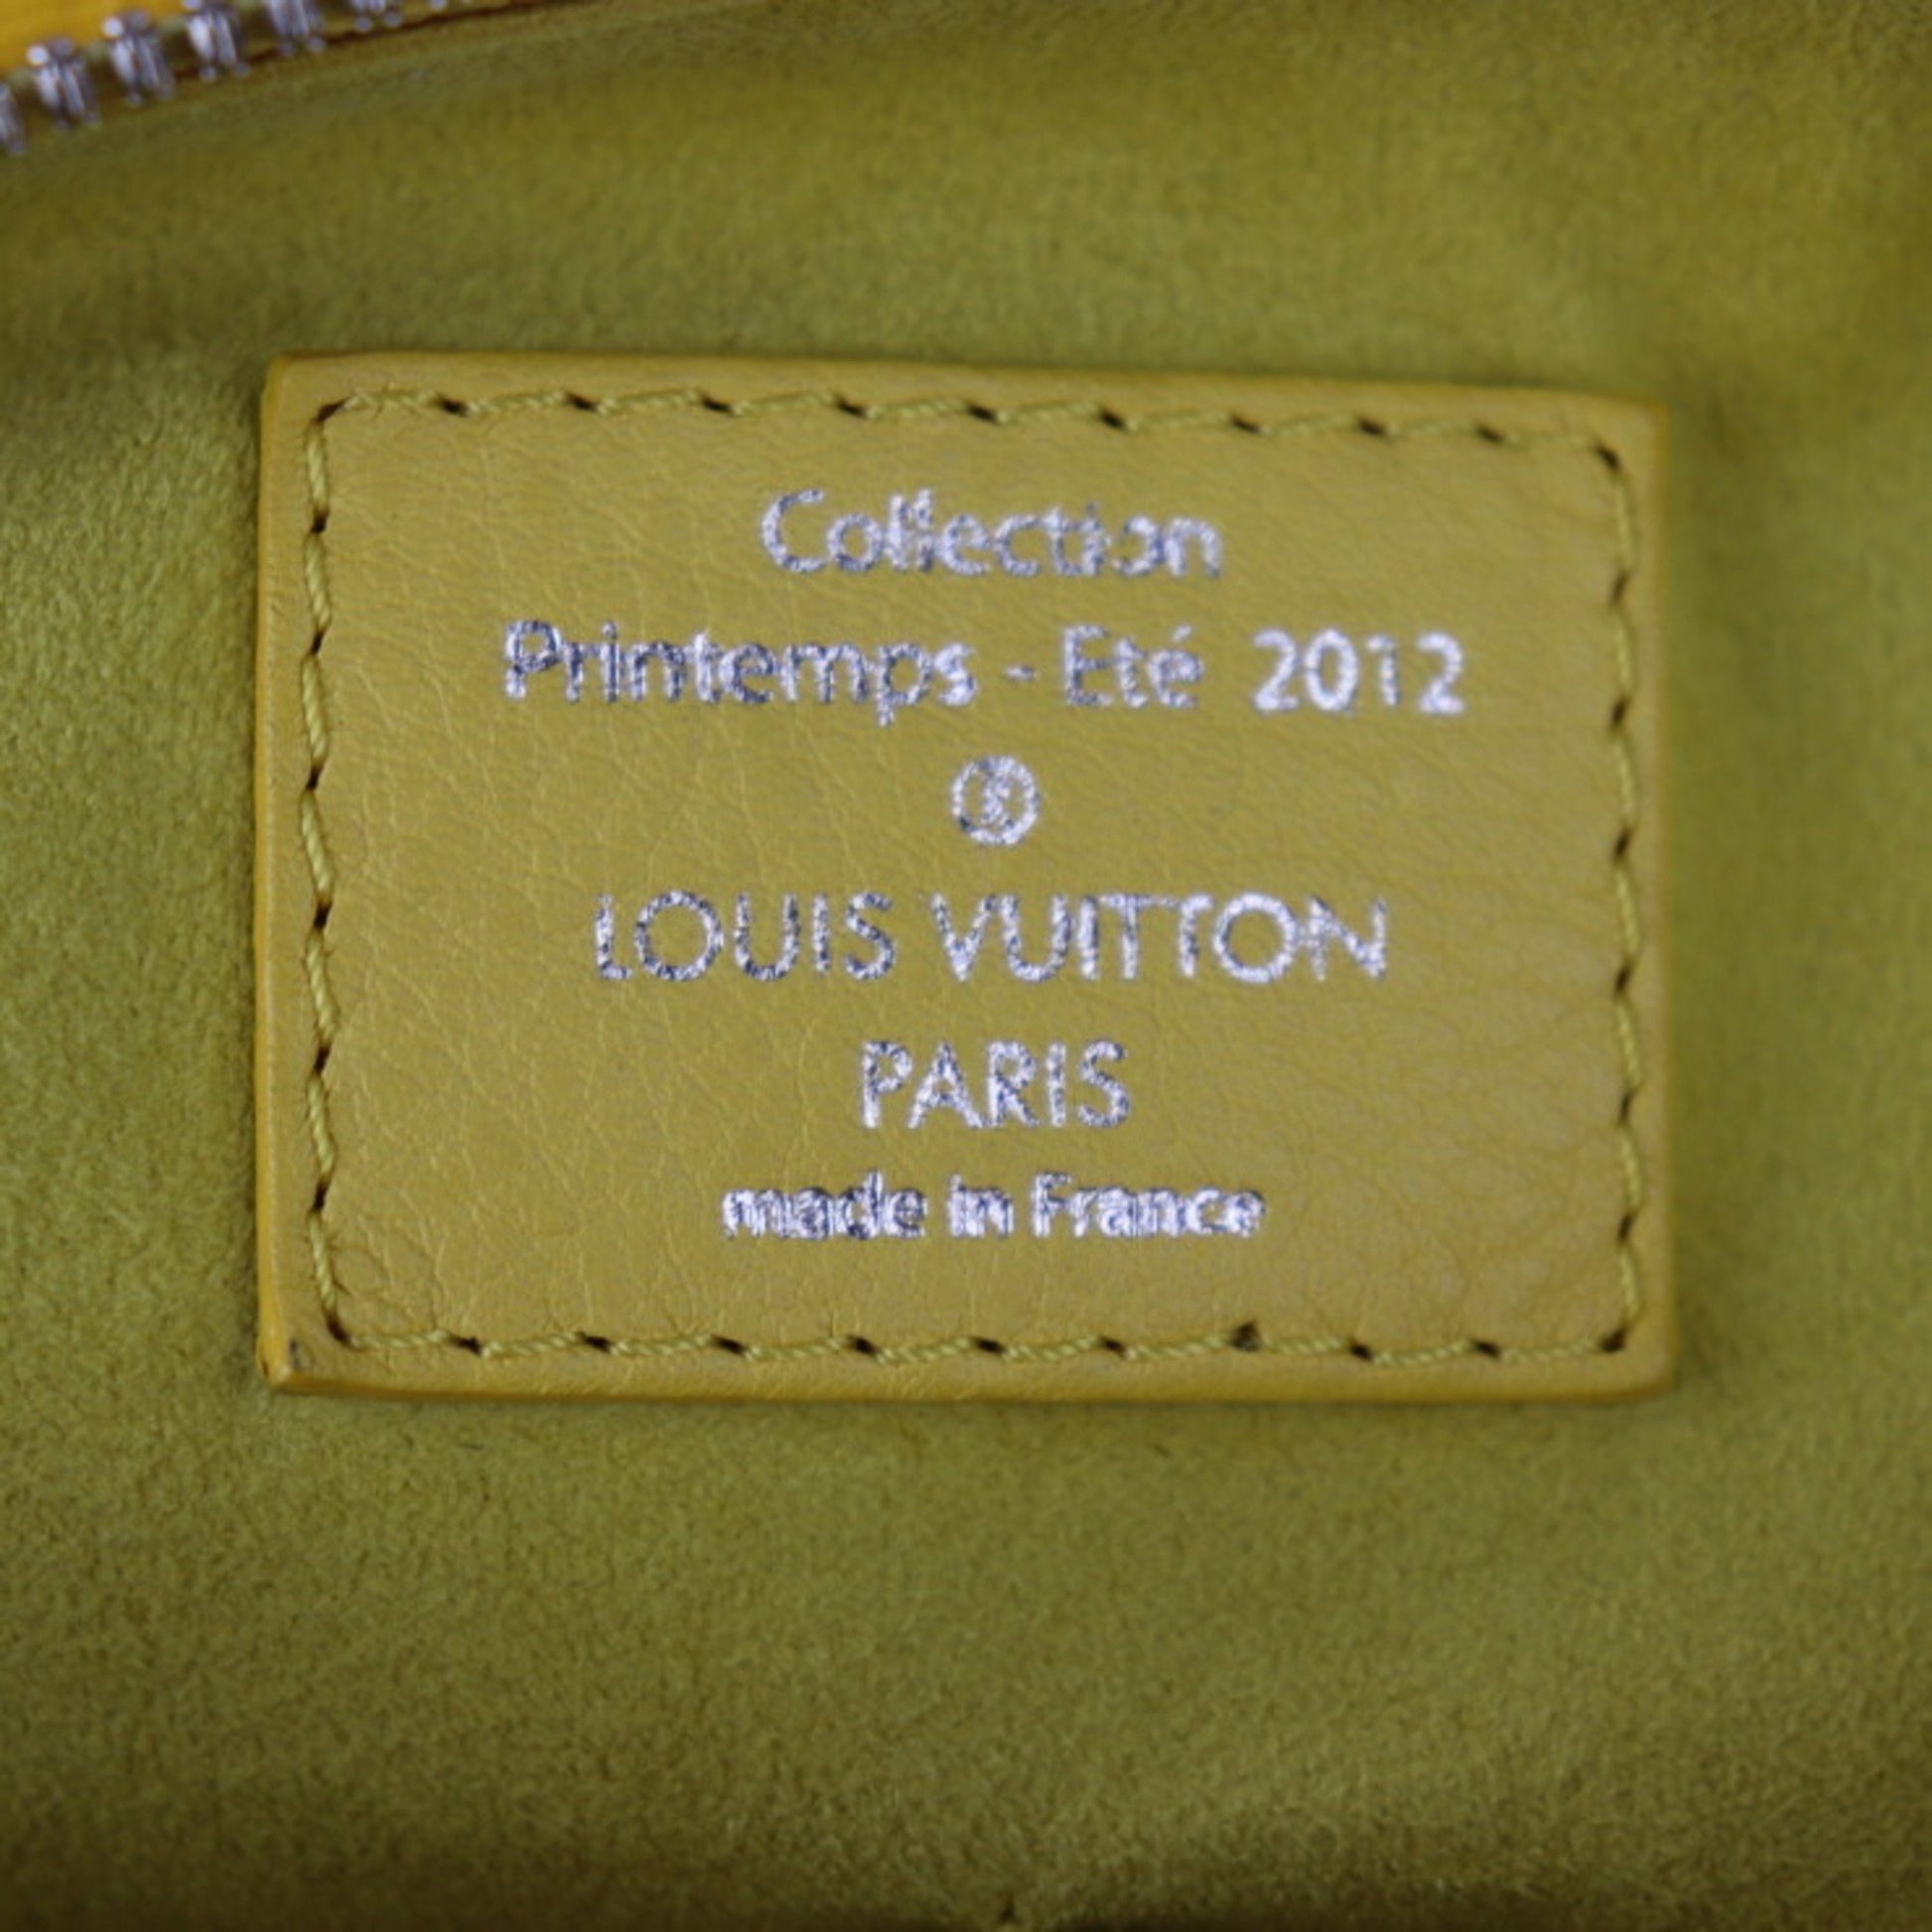 Authenticated Used LOUIS VUITTON Louis Vuitton Speedy Round Handbag M40709  Monogram Denim Leather Jaune Yellow Series Silver Hardware 2WAY Shoulder Bag  Mini Boston 